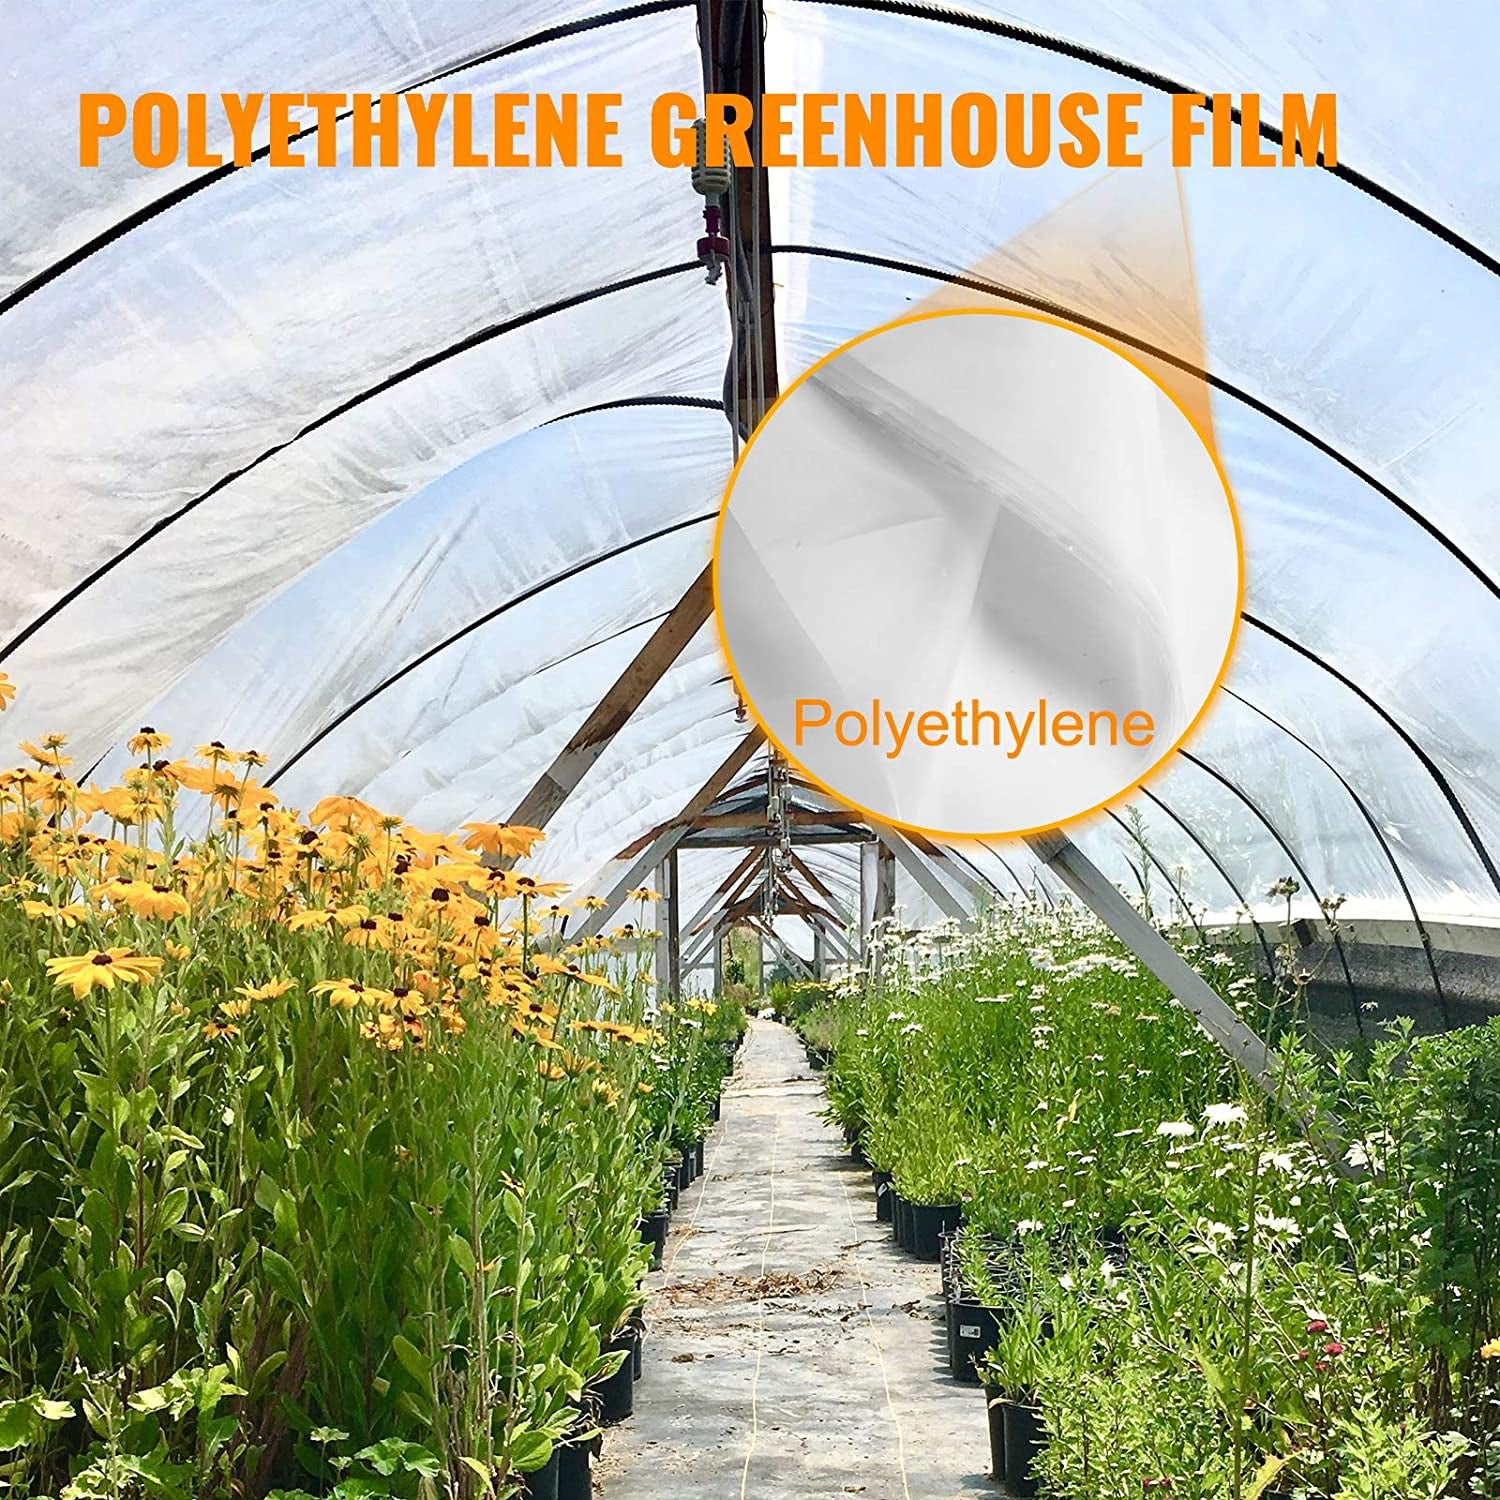 Greenhouse Film 15 X 40 Ft, Greenhouse Polyethylene Film 6 Mil Thickness, Greenhouse Plastic Greenhouse Clear Plastic Film UV Resistant, Polyethylene Film Keep Warming, Superior Strength